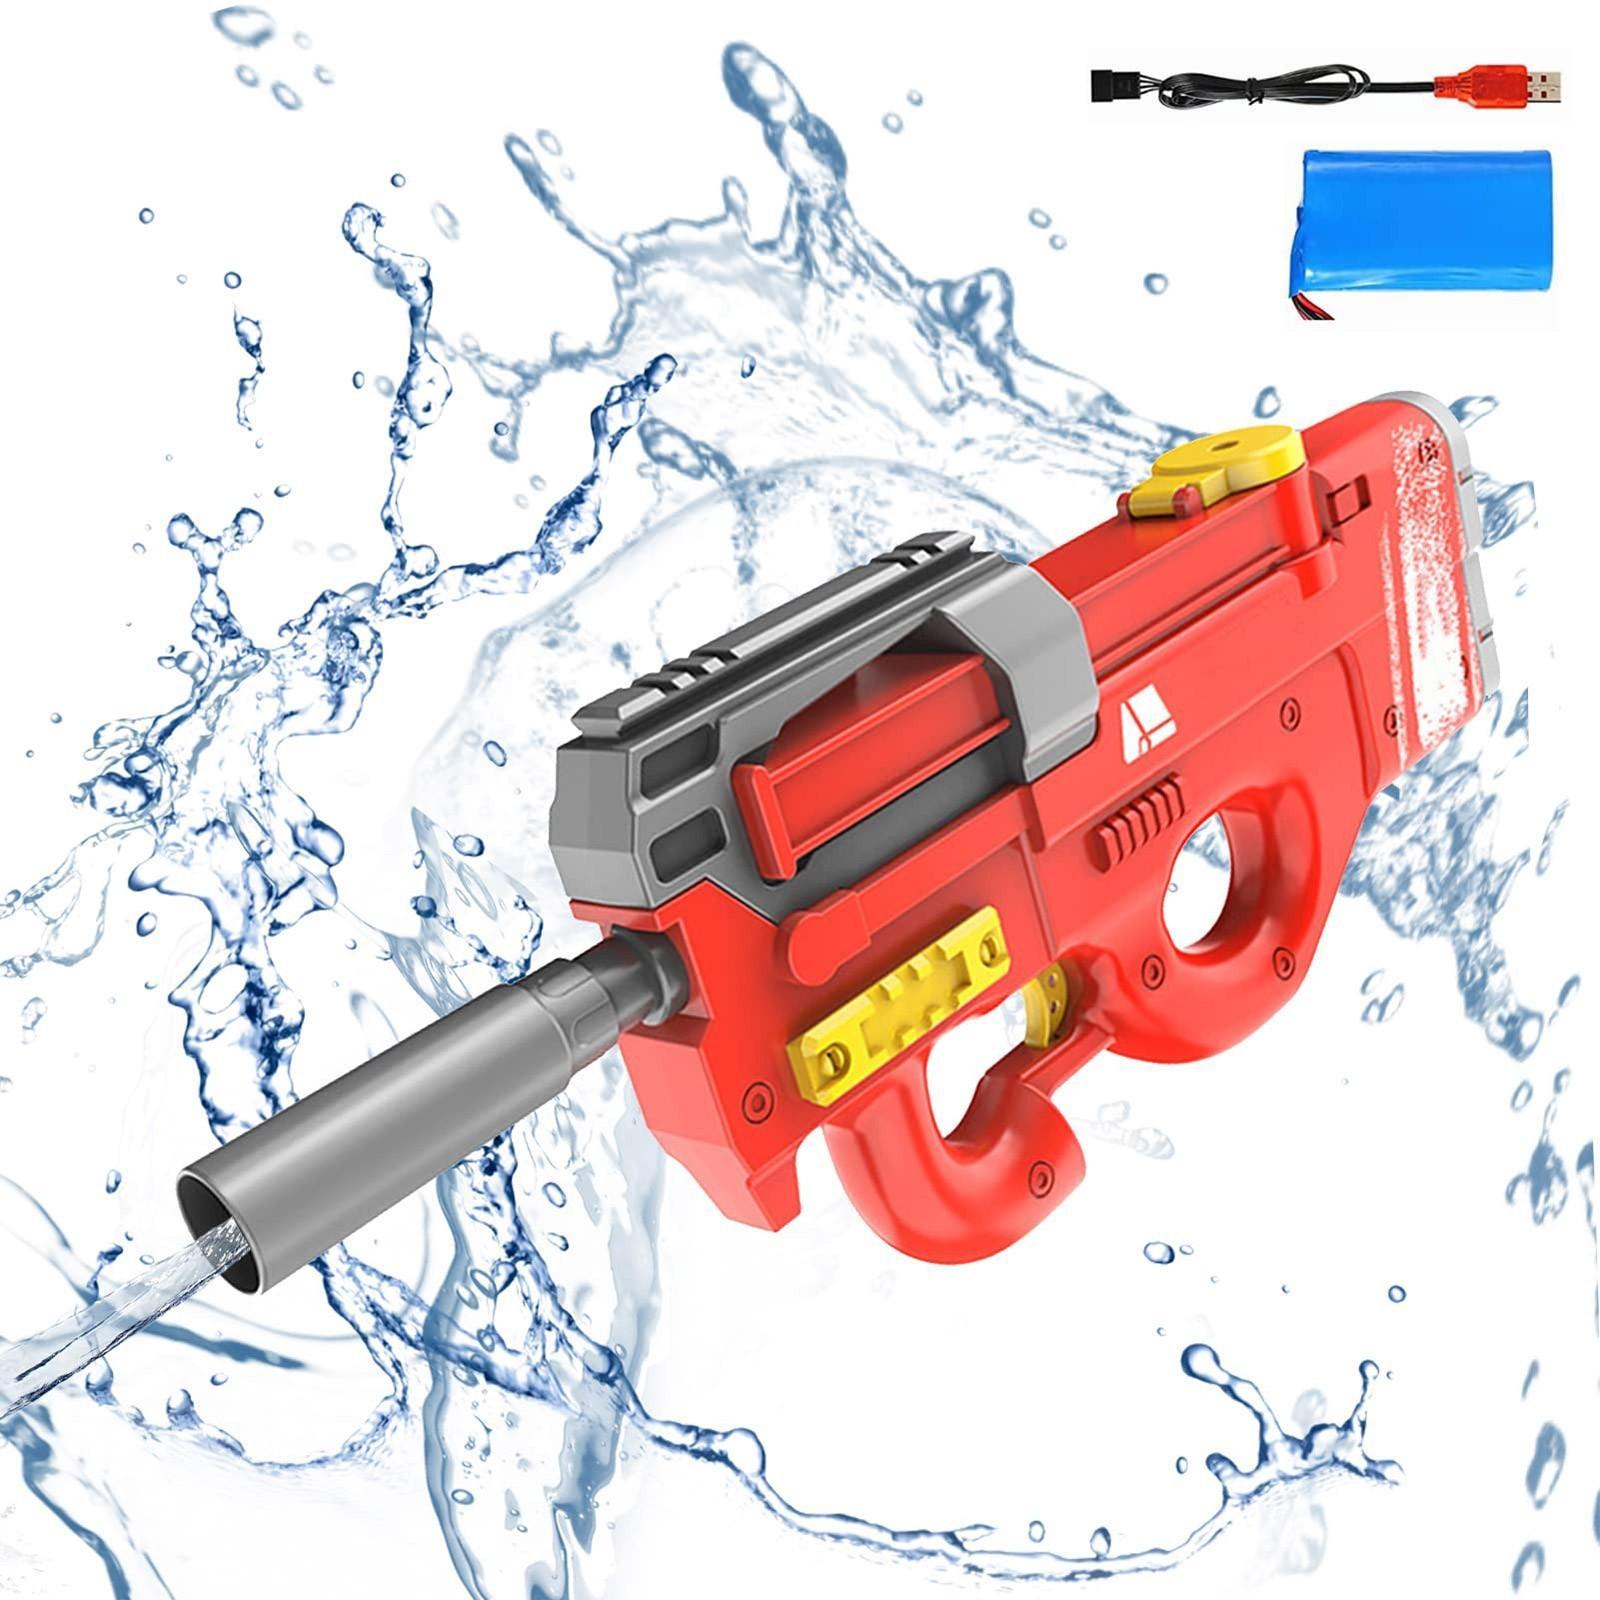 High-Tech Electric Water Gun - P90 Design, Large Capacity, for Outdoor Summer Fun